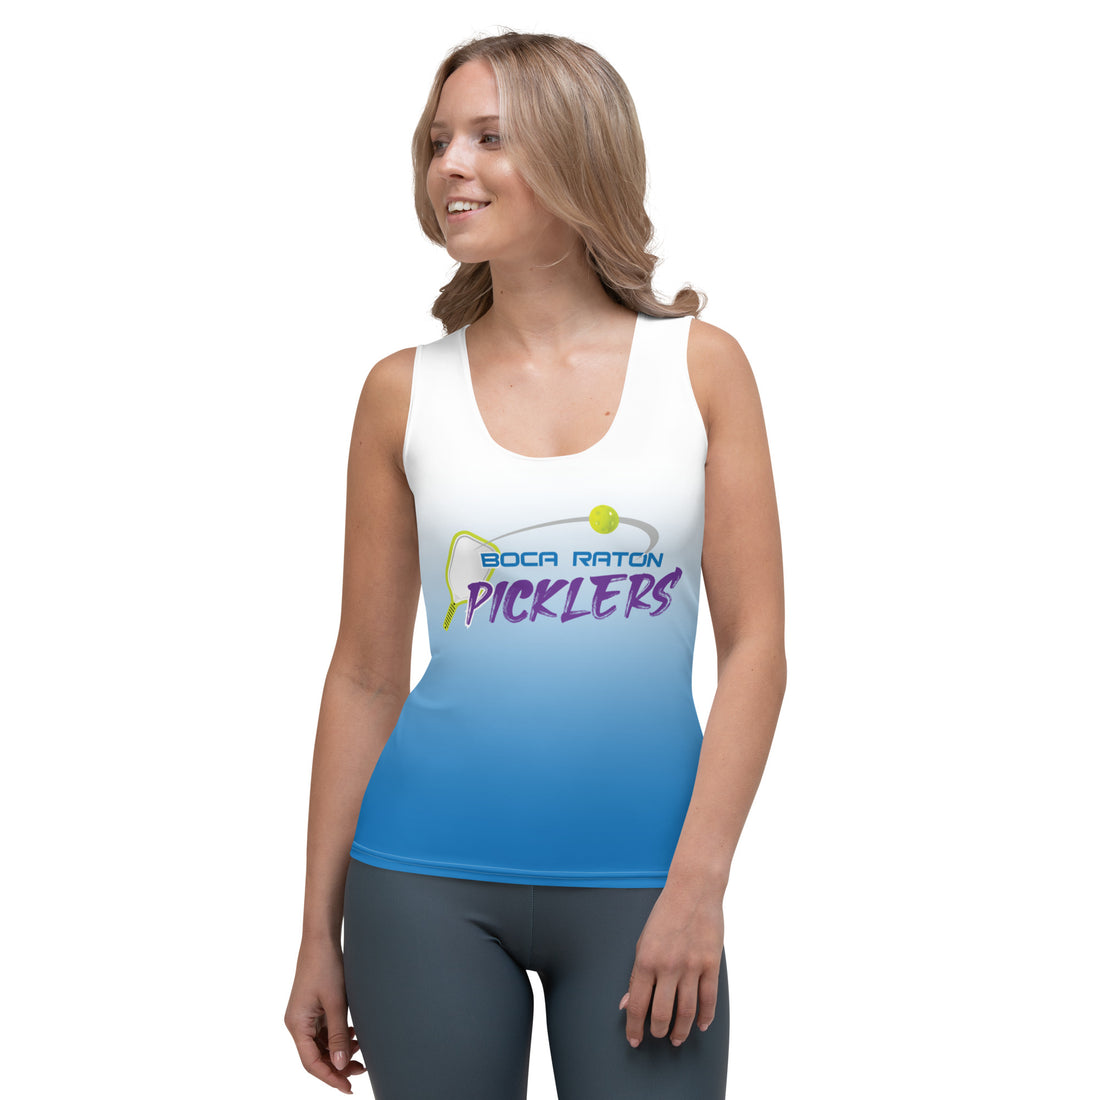 Scott Johnston 30 Boca Raton Picklers™ SKYblue™ Women's Sleeveless Fan Jersey in Ombre Turquoise